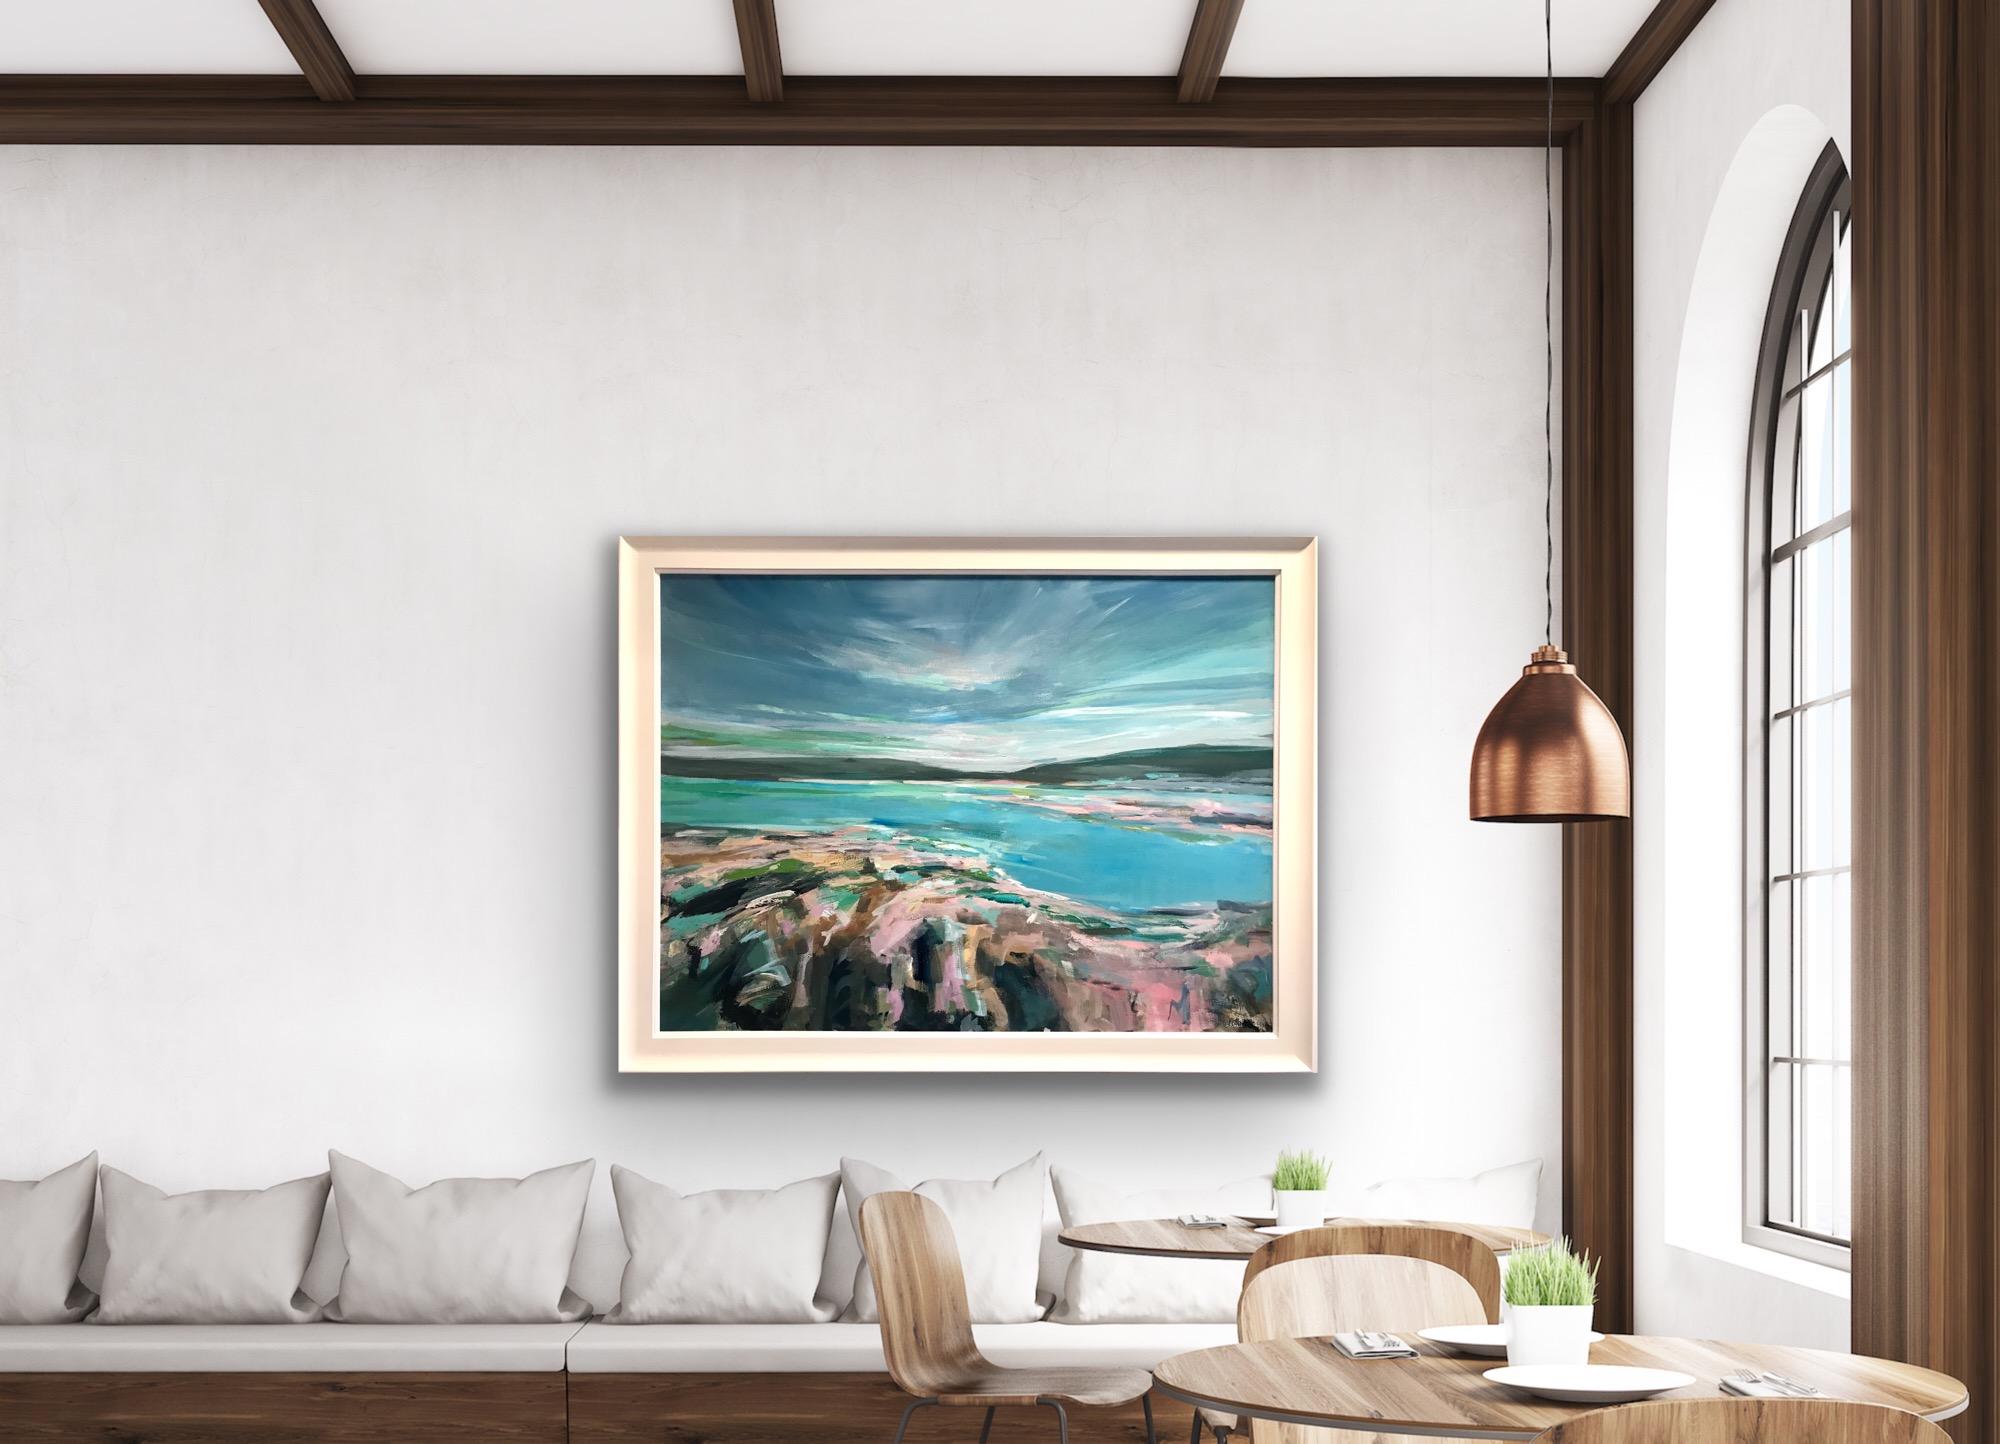 Whispering Sky, River Clyde, Scotland, Original painting, Seascape, Contemporary 6